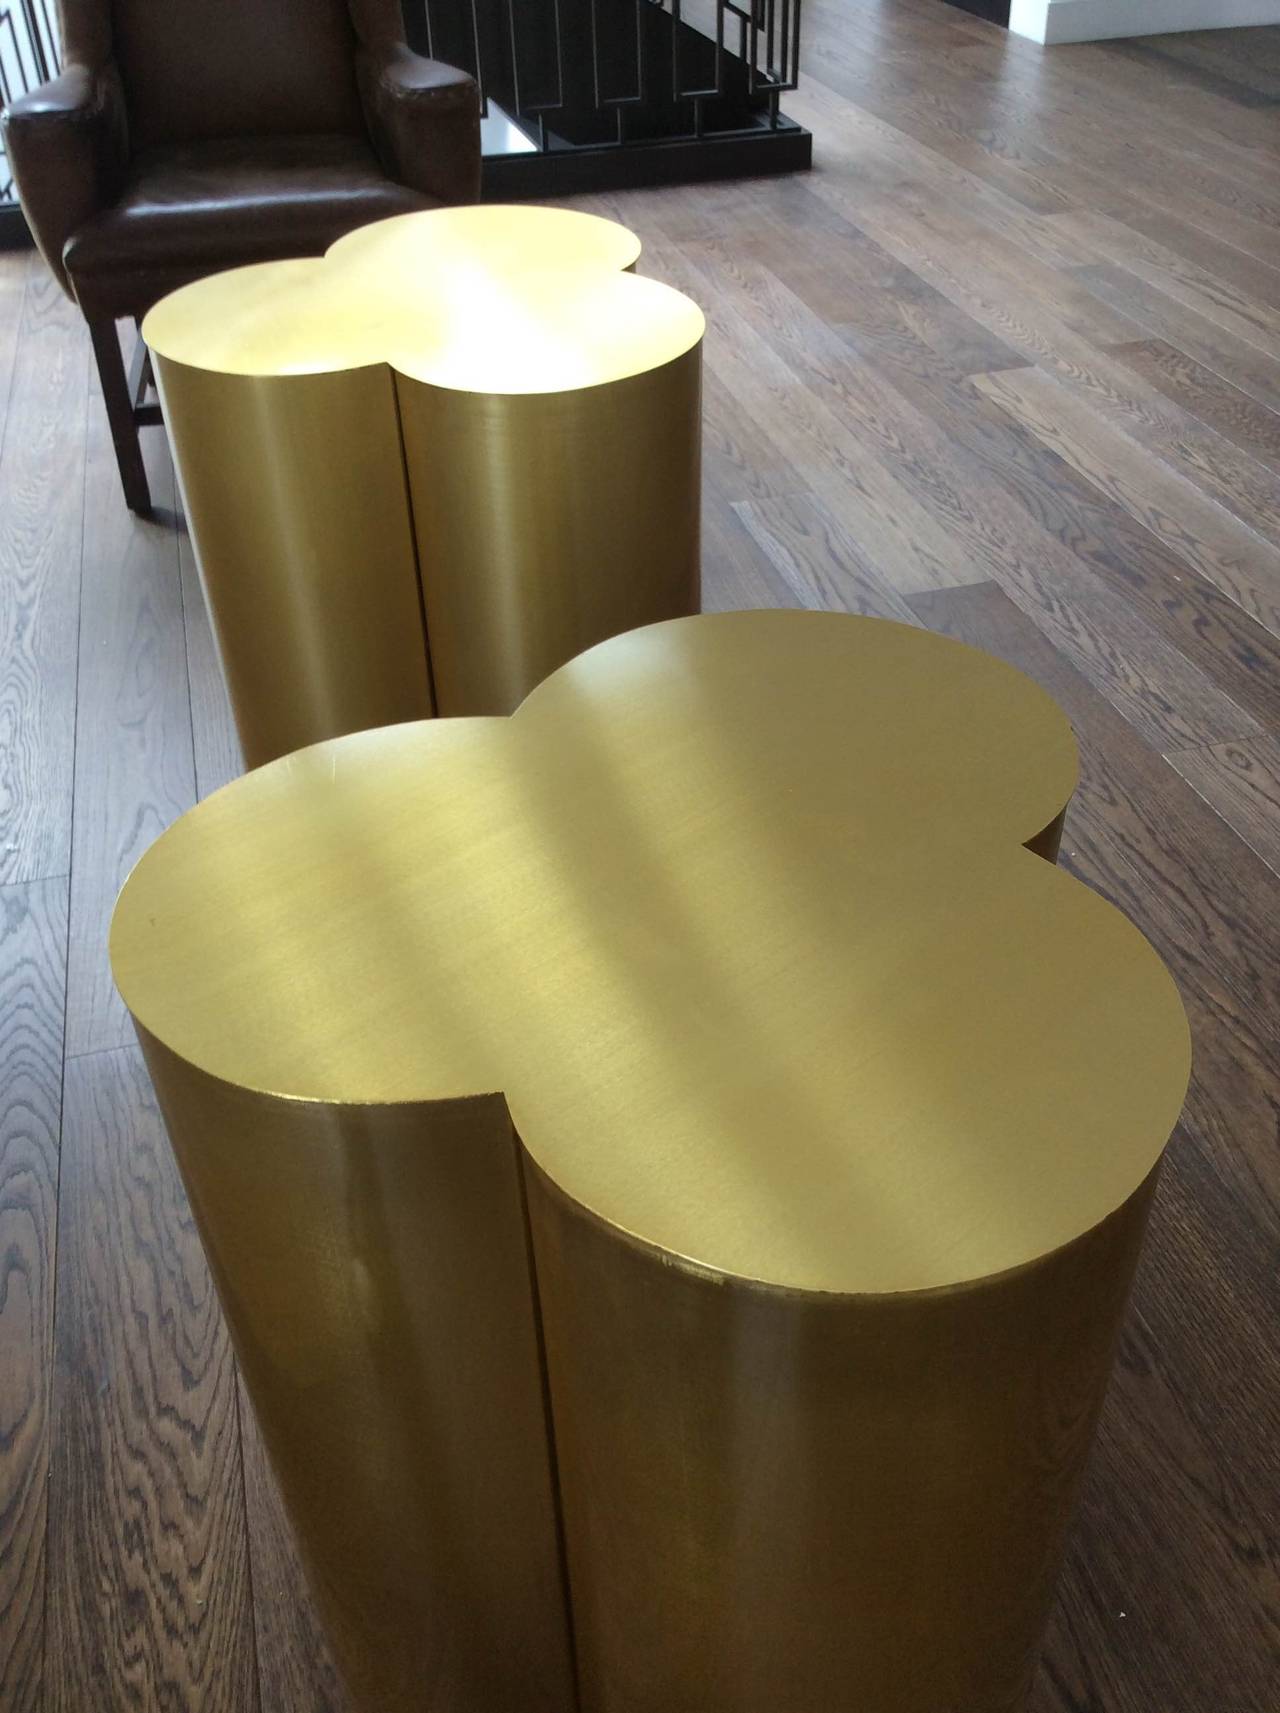 American Custom Trefoil Dining Table Pedestal Bases in Polished Brass